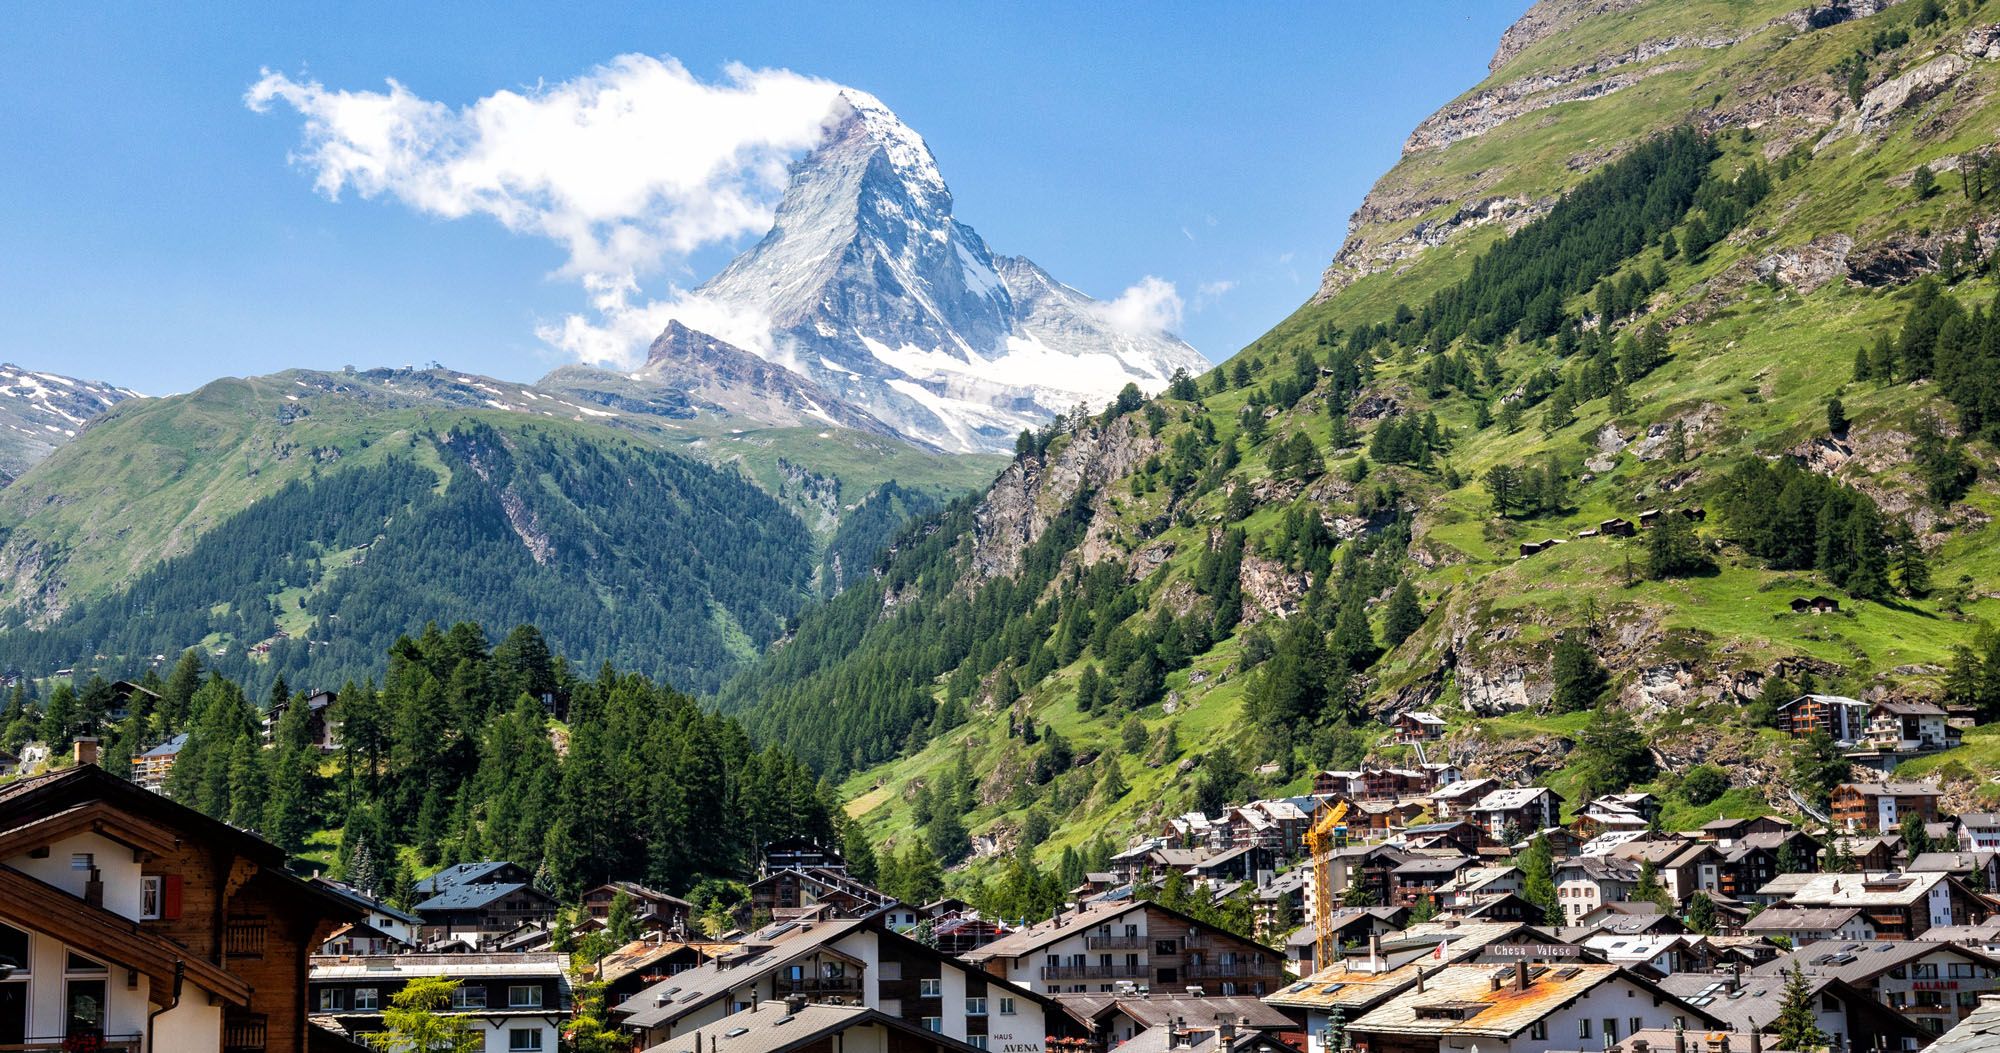 Featured image for “12 Amazing Things to do in Zermatt, Switzerland”